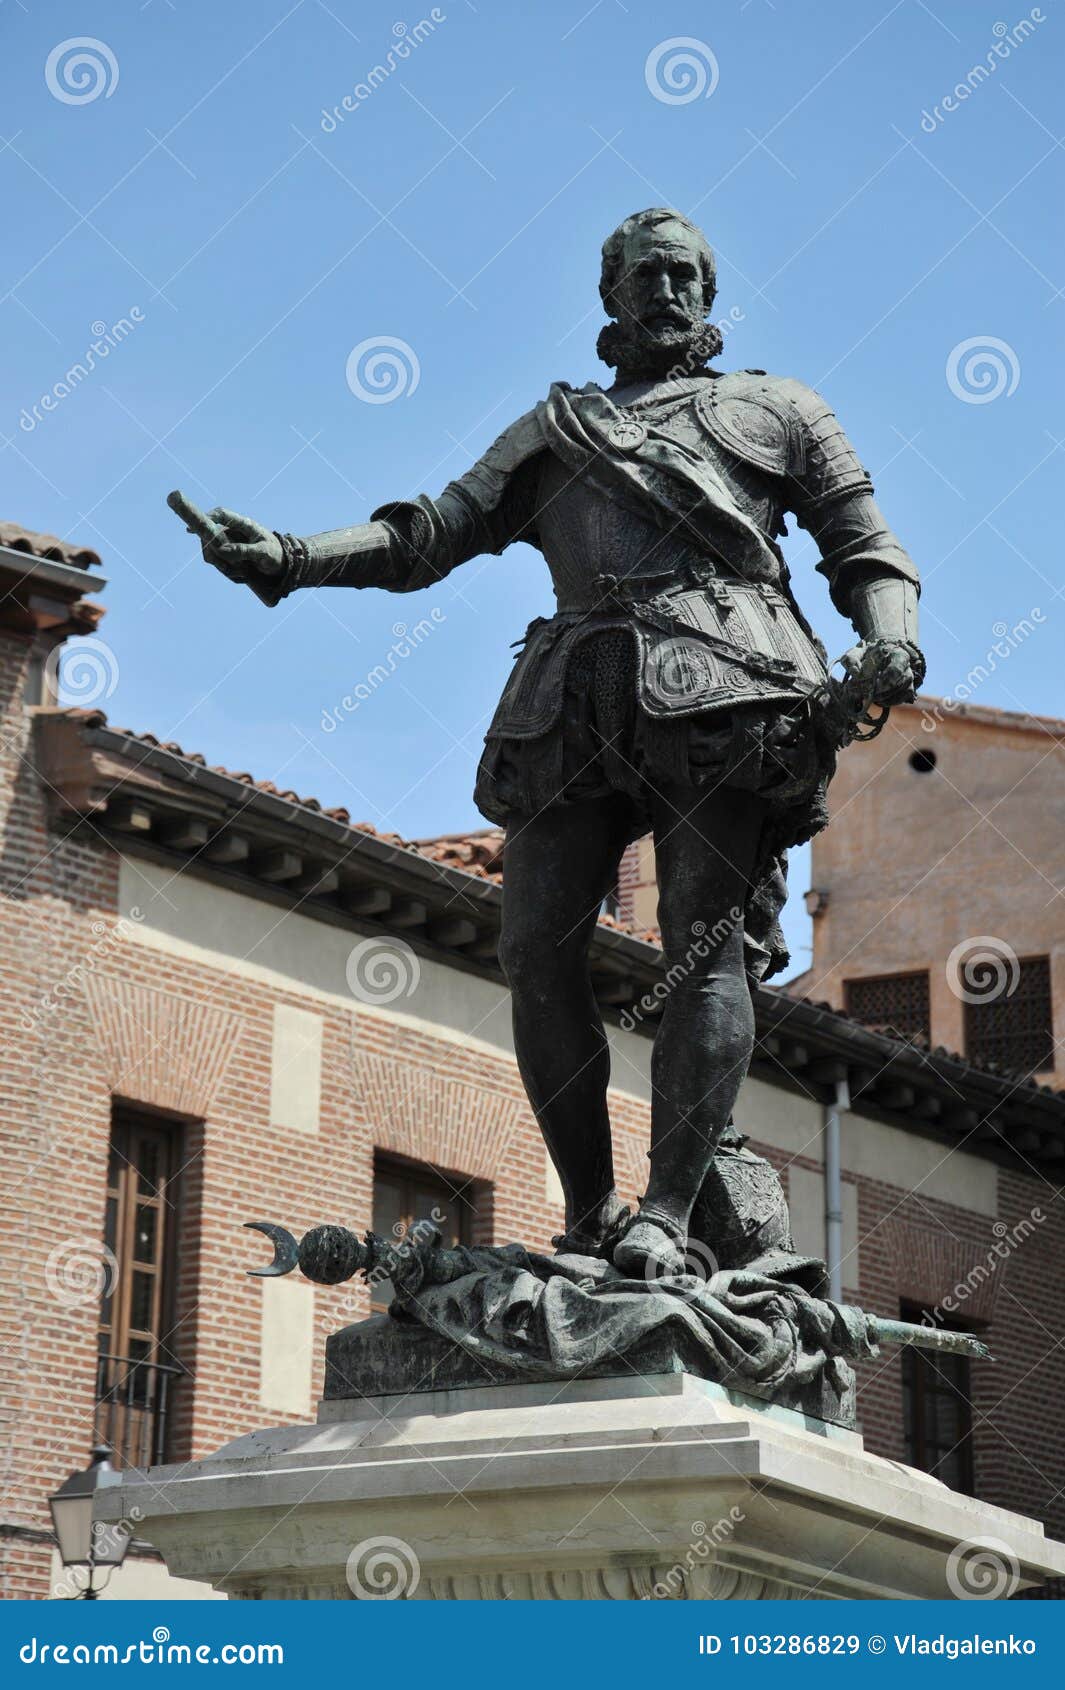 bronze statue don alvaro de bazan, famous admiral, plaza de la villa, madrid spain. statue in front of casa de cisneros, created i